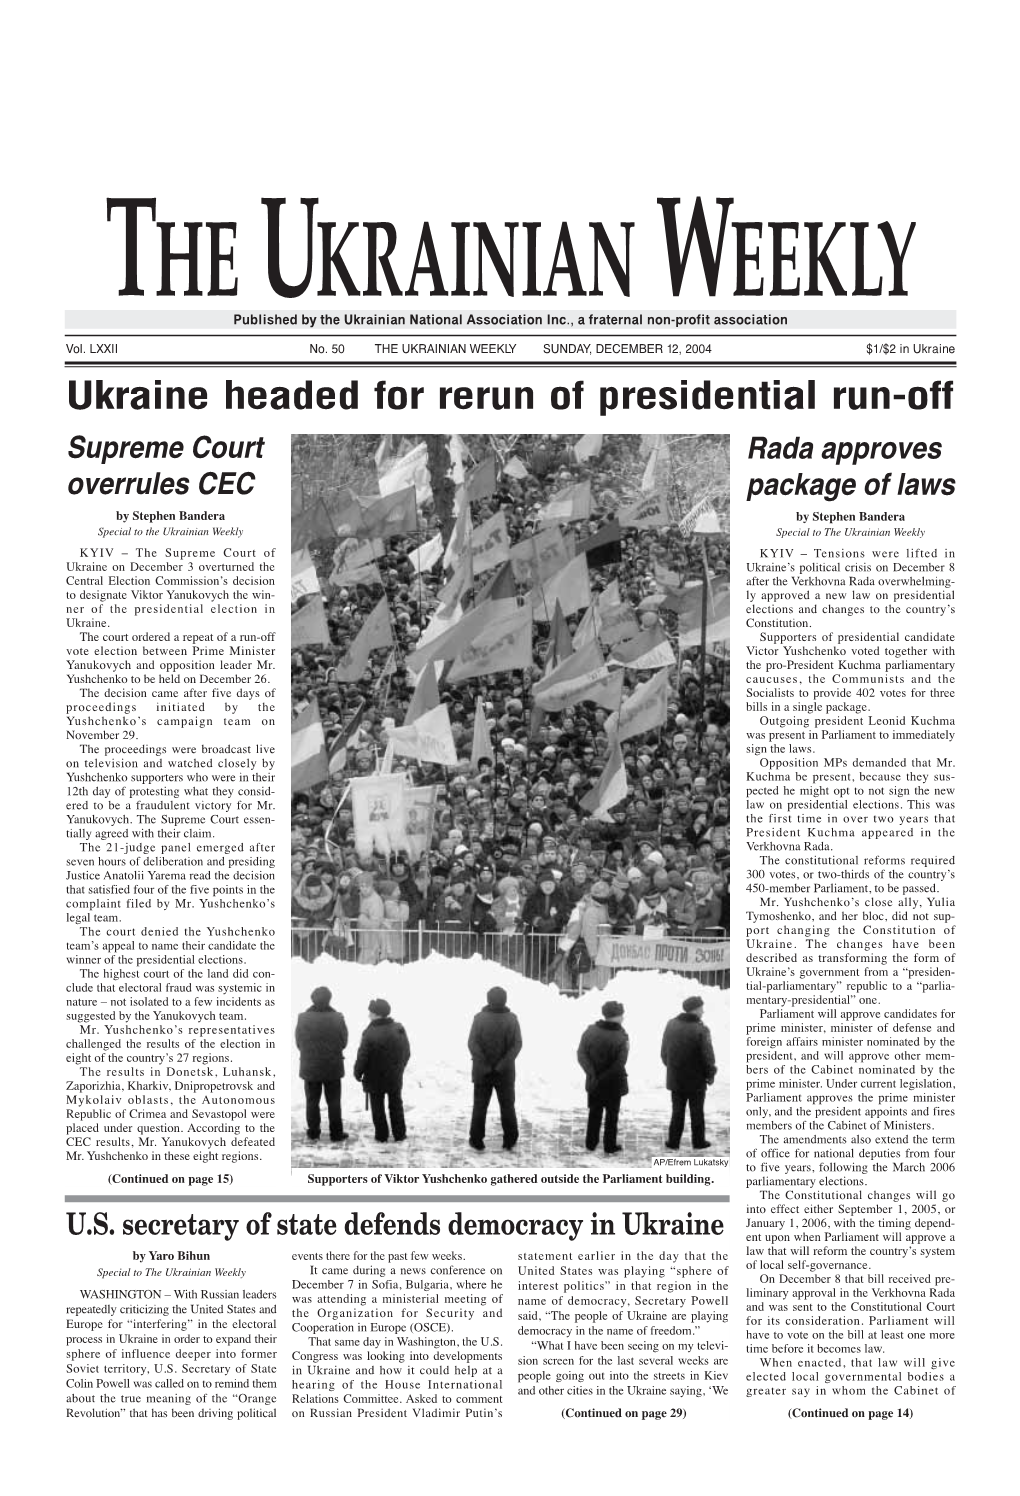 The Ukrainian Weekly 2004, No.50